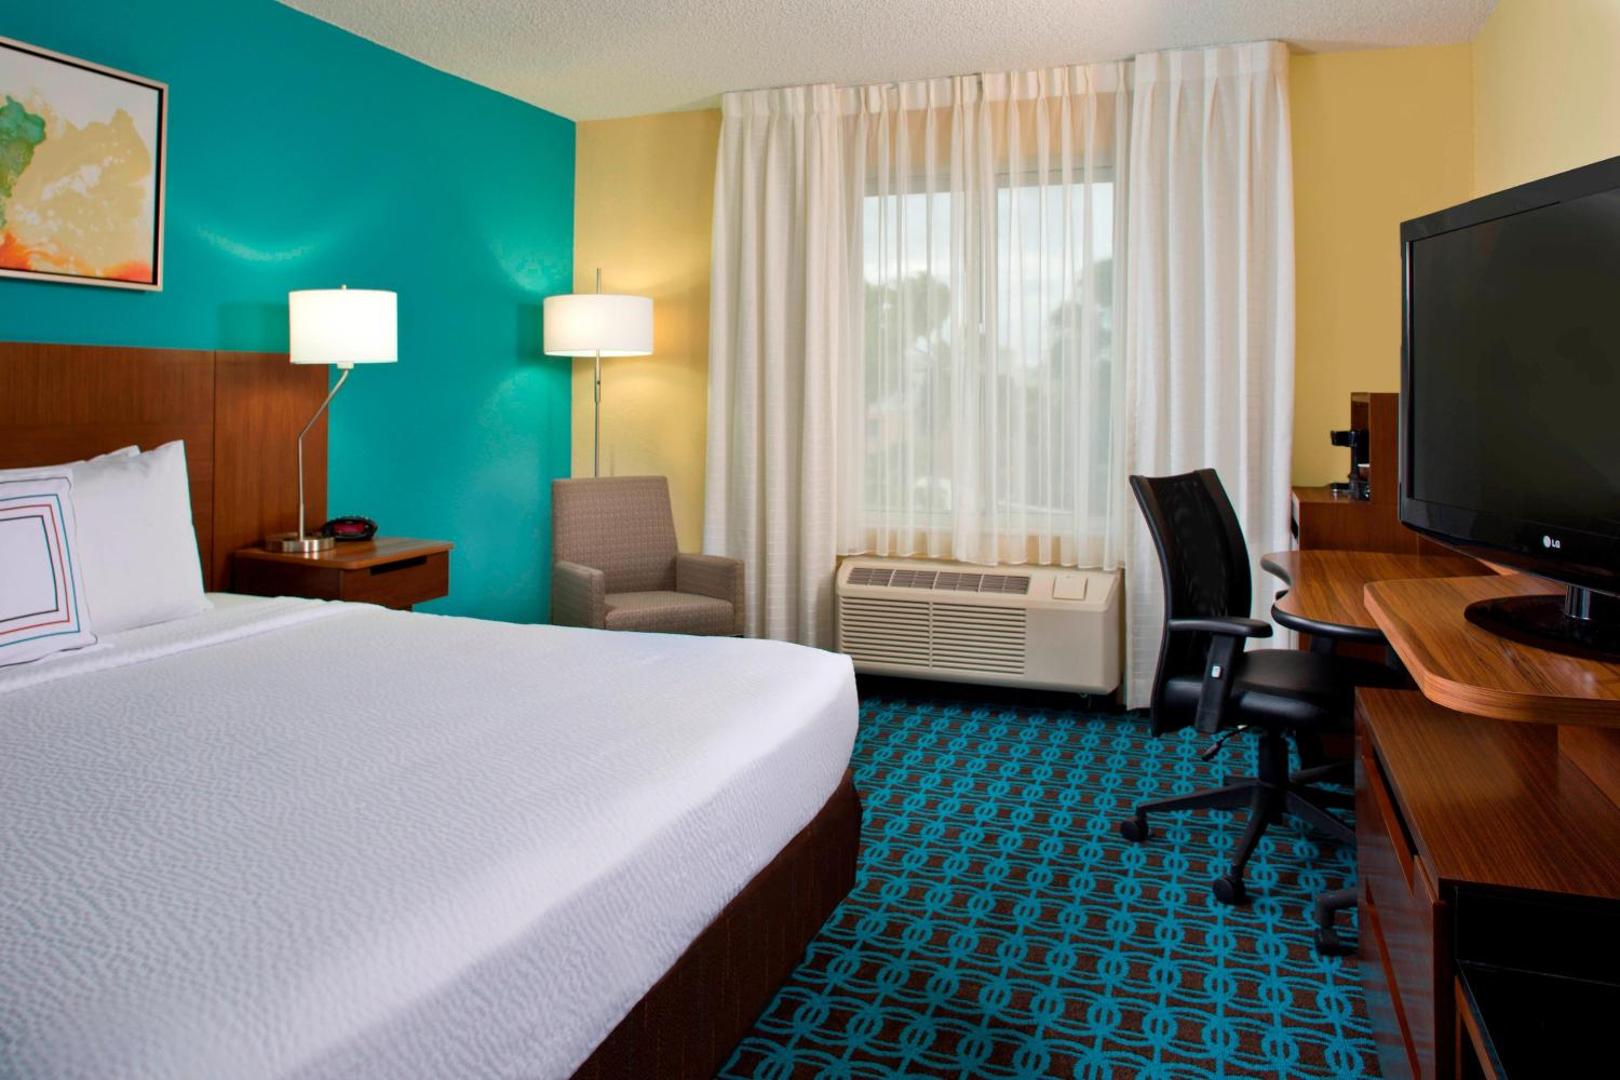 Fairfield Inn & Suites Orlando Lake Buena Vista in the Marriott Village